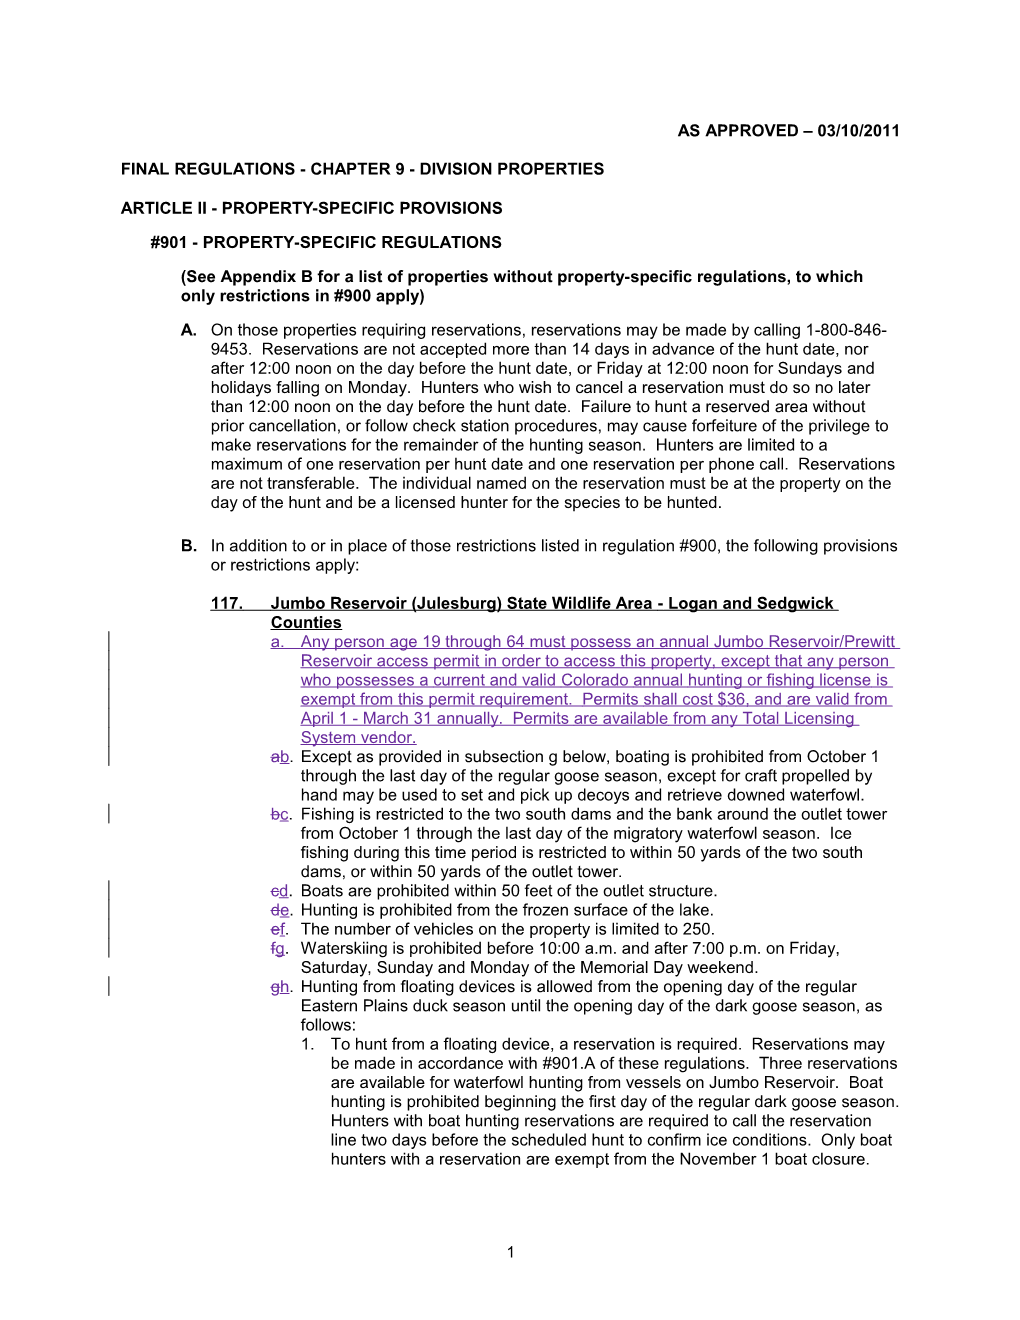 Final Regulations - Chapter 9 - Division Properties